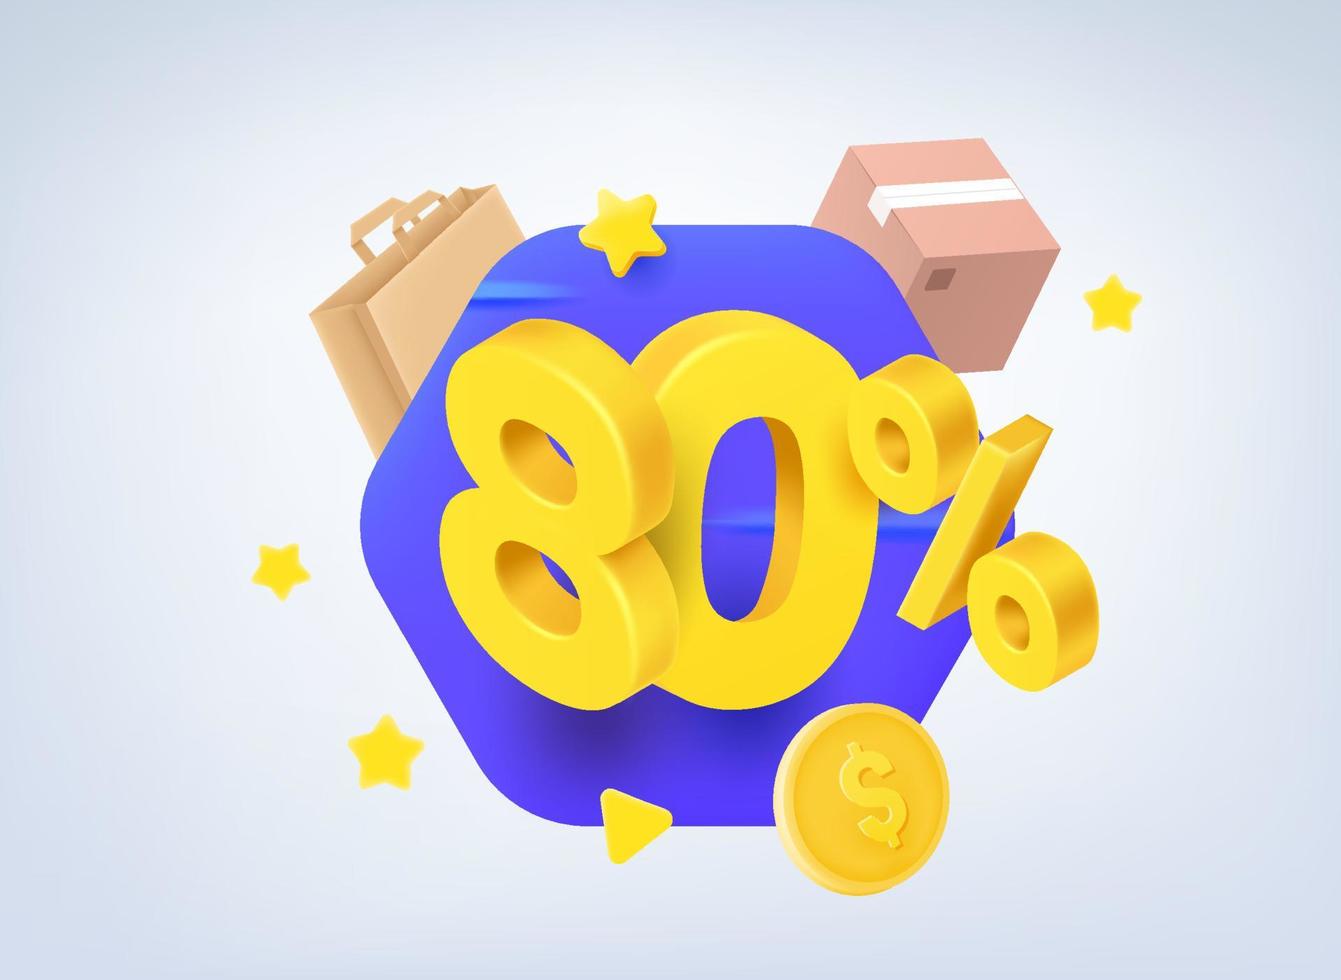 80 percent sale concept. 3d vector illustration